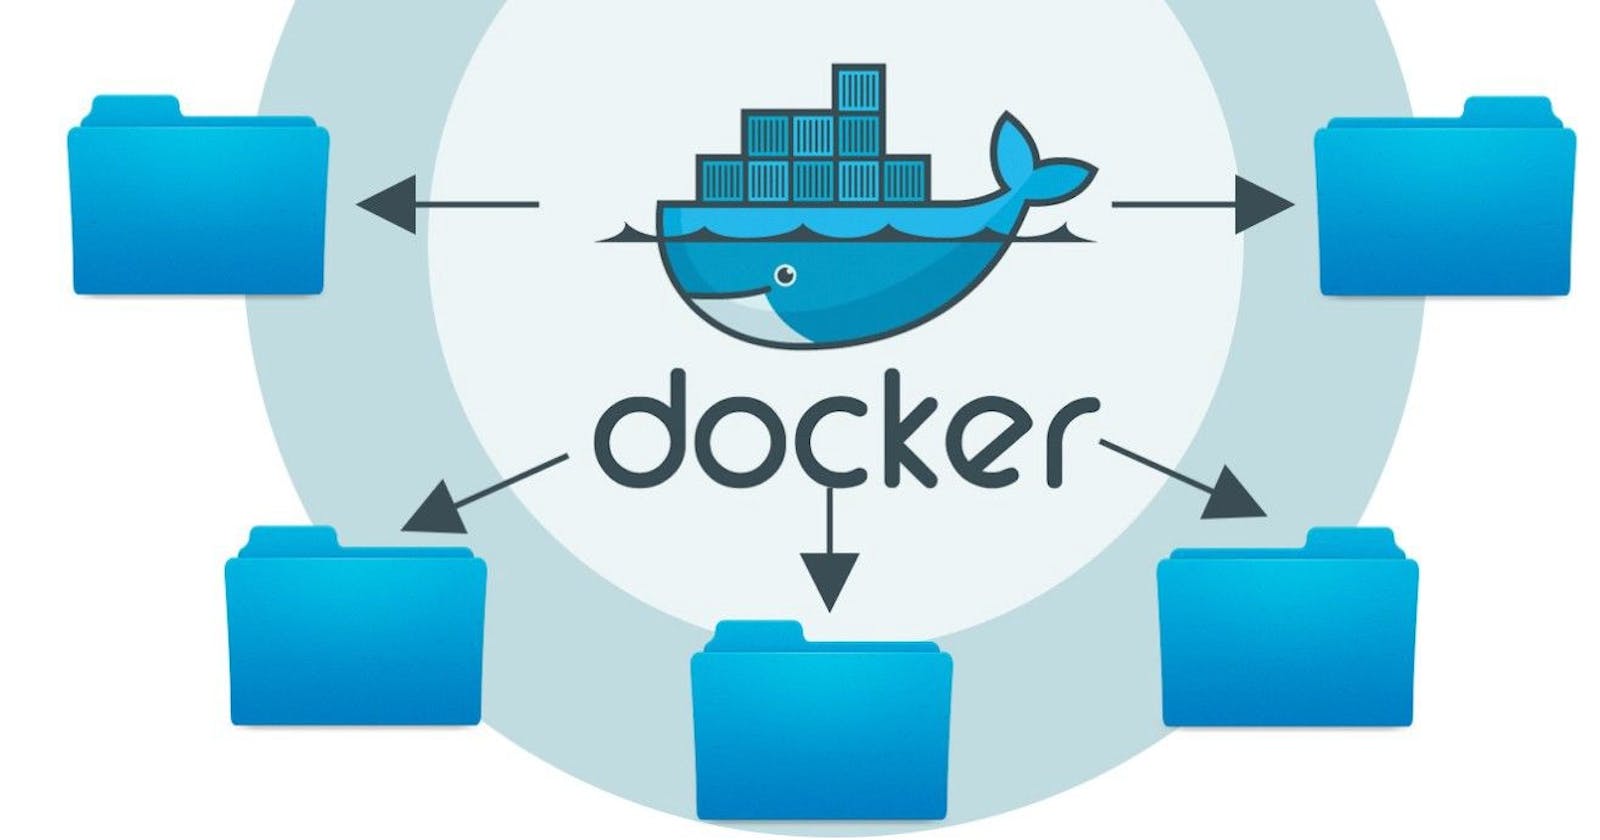 Overview: Docker